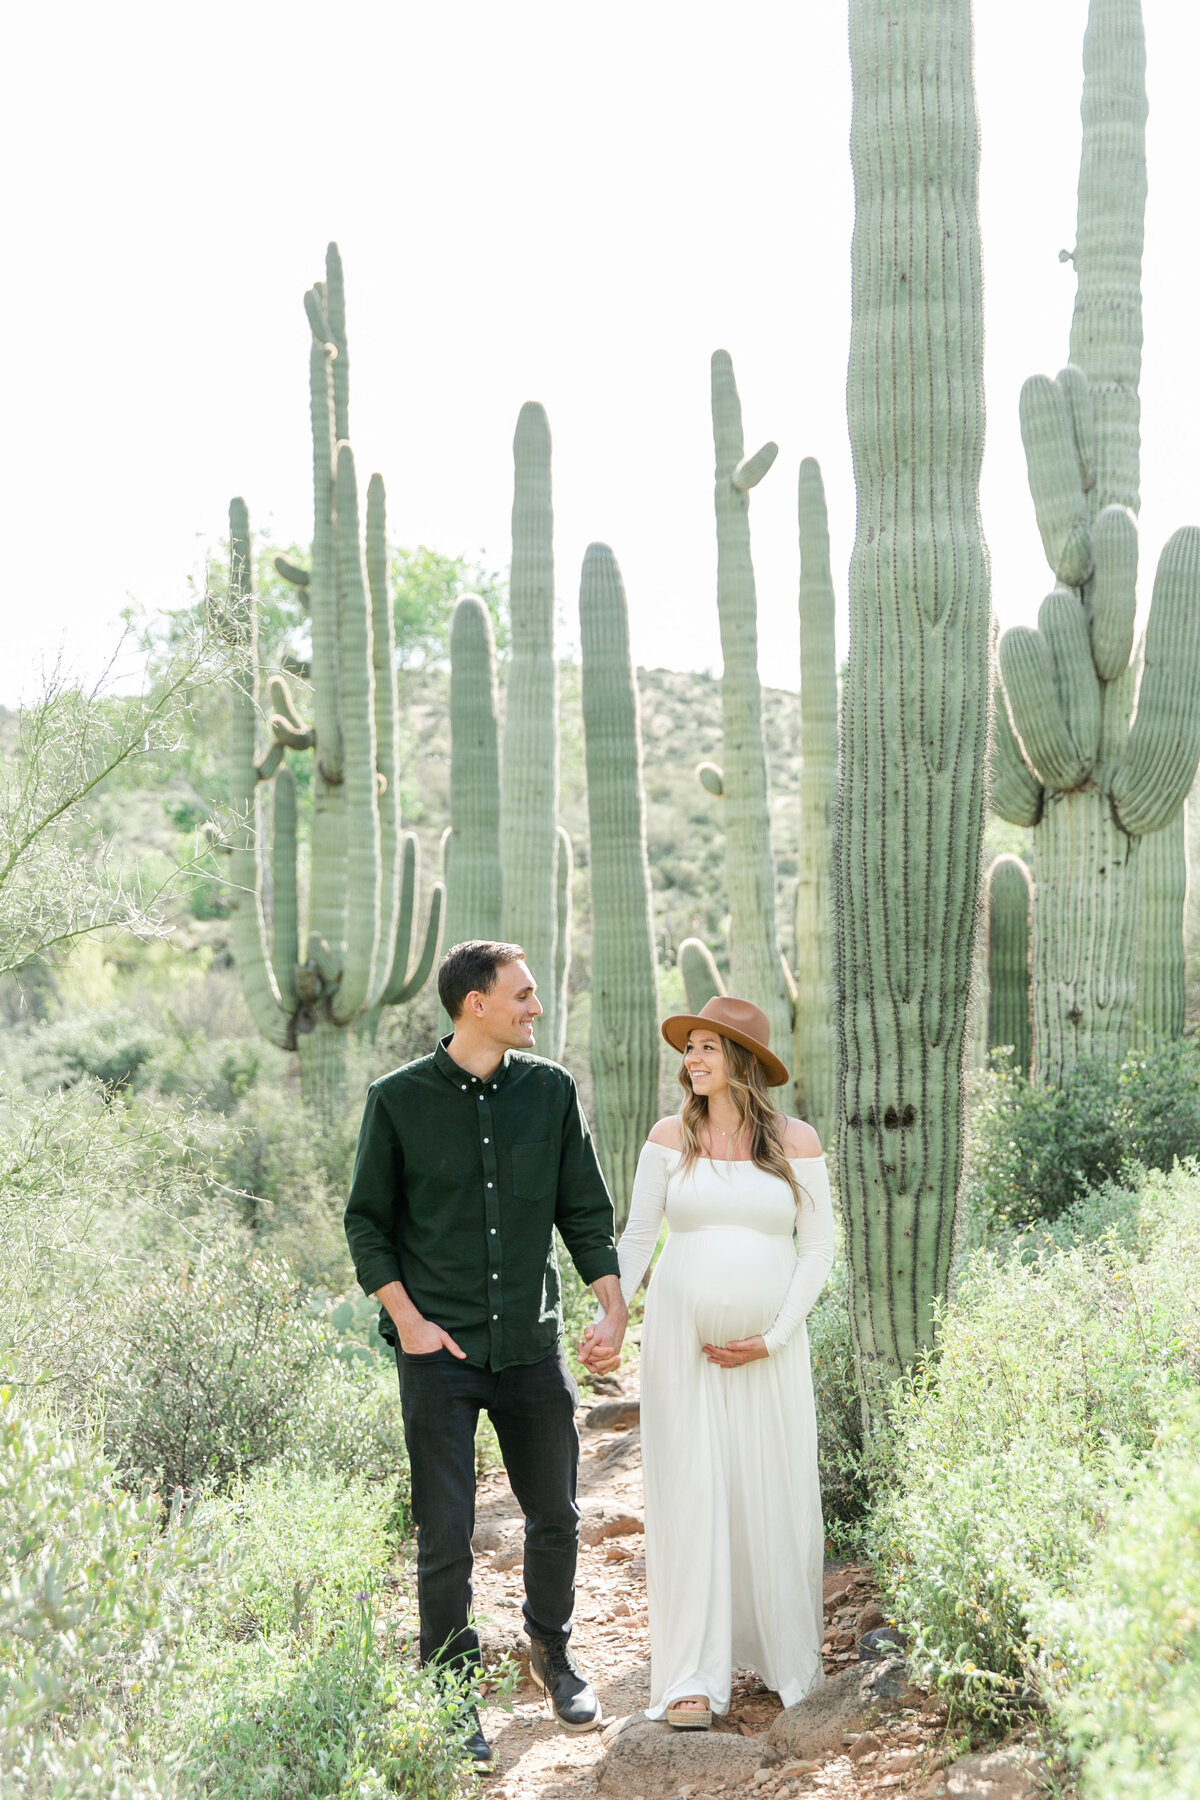 Karlie Colleen Photography - Scottsdale Arizona Maternity Photographer - Kylie & Troy-32